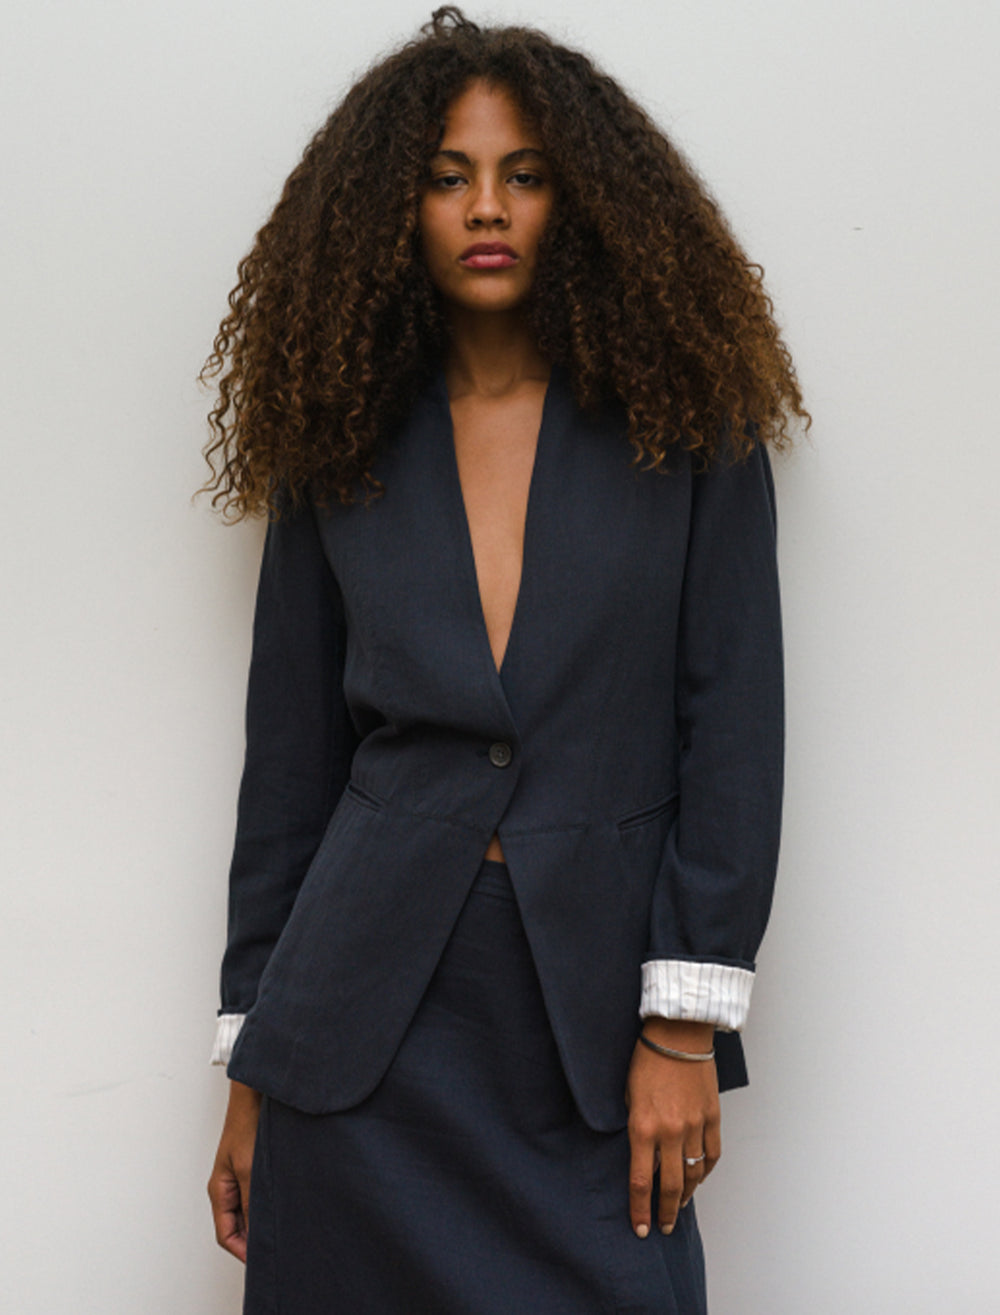 Model wearing Alex Mill's bib seam blazer in washed black.